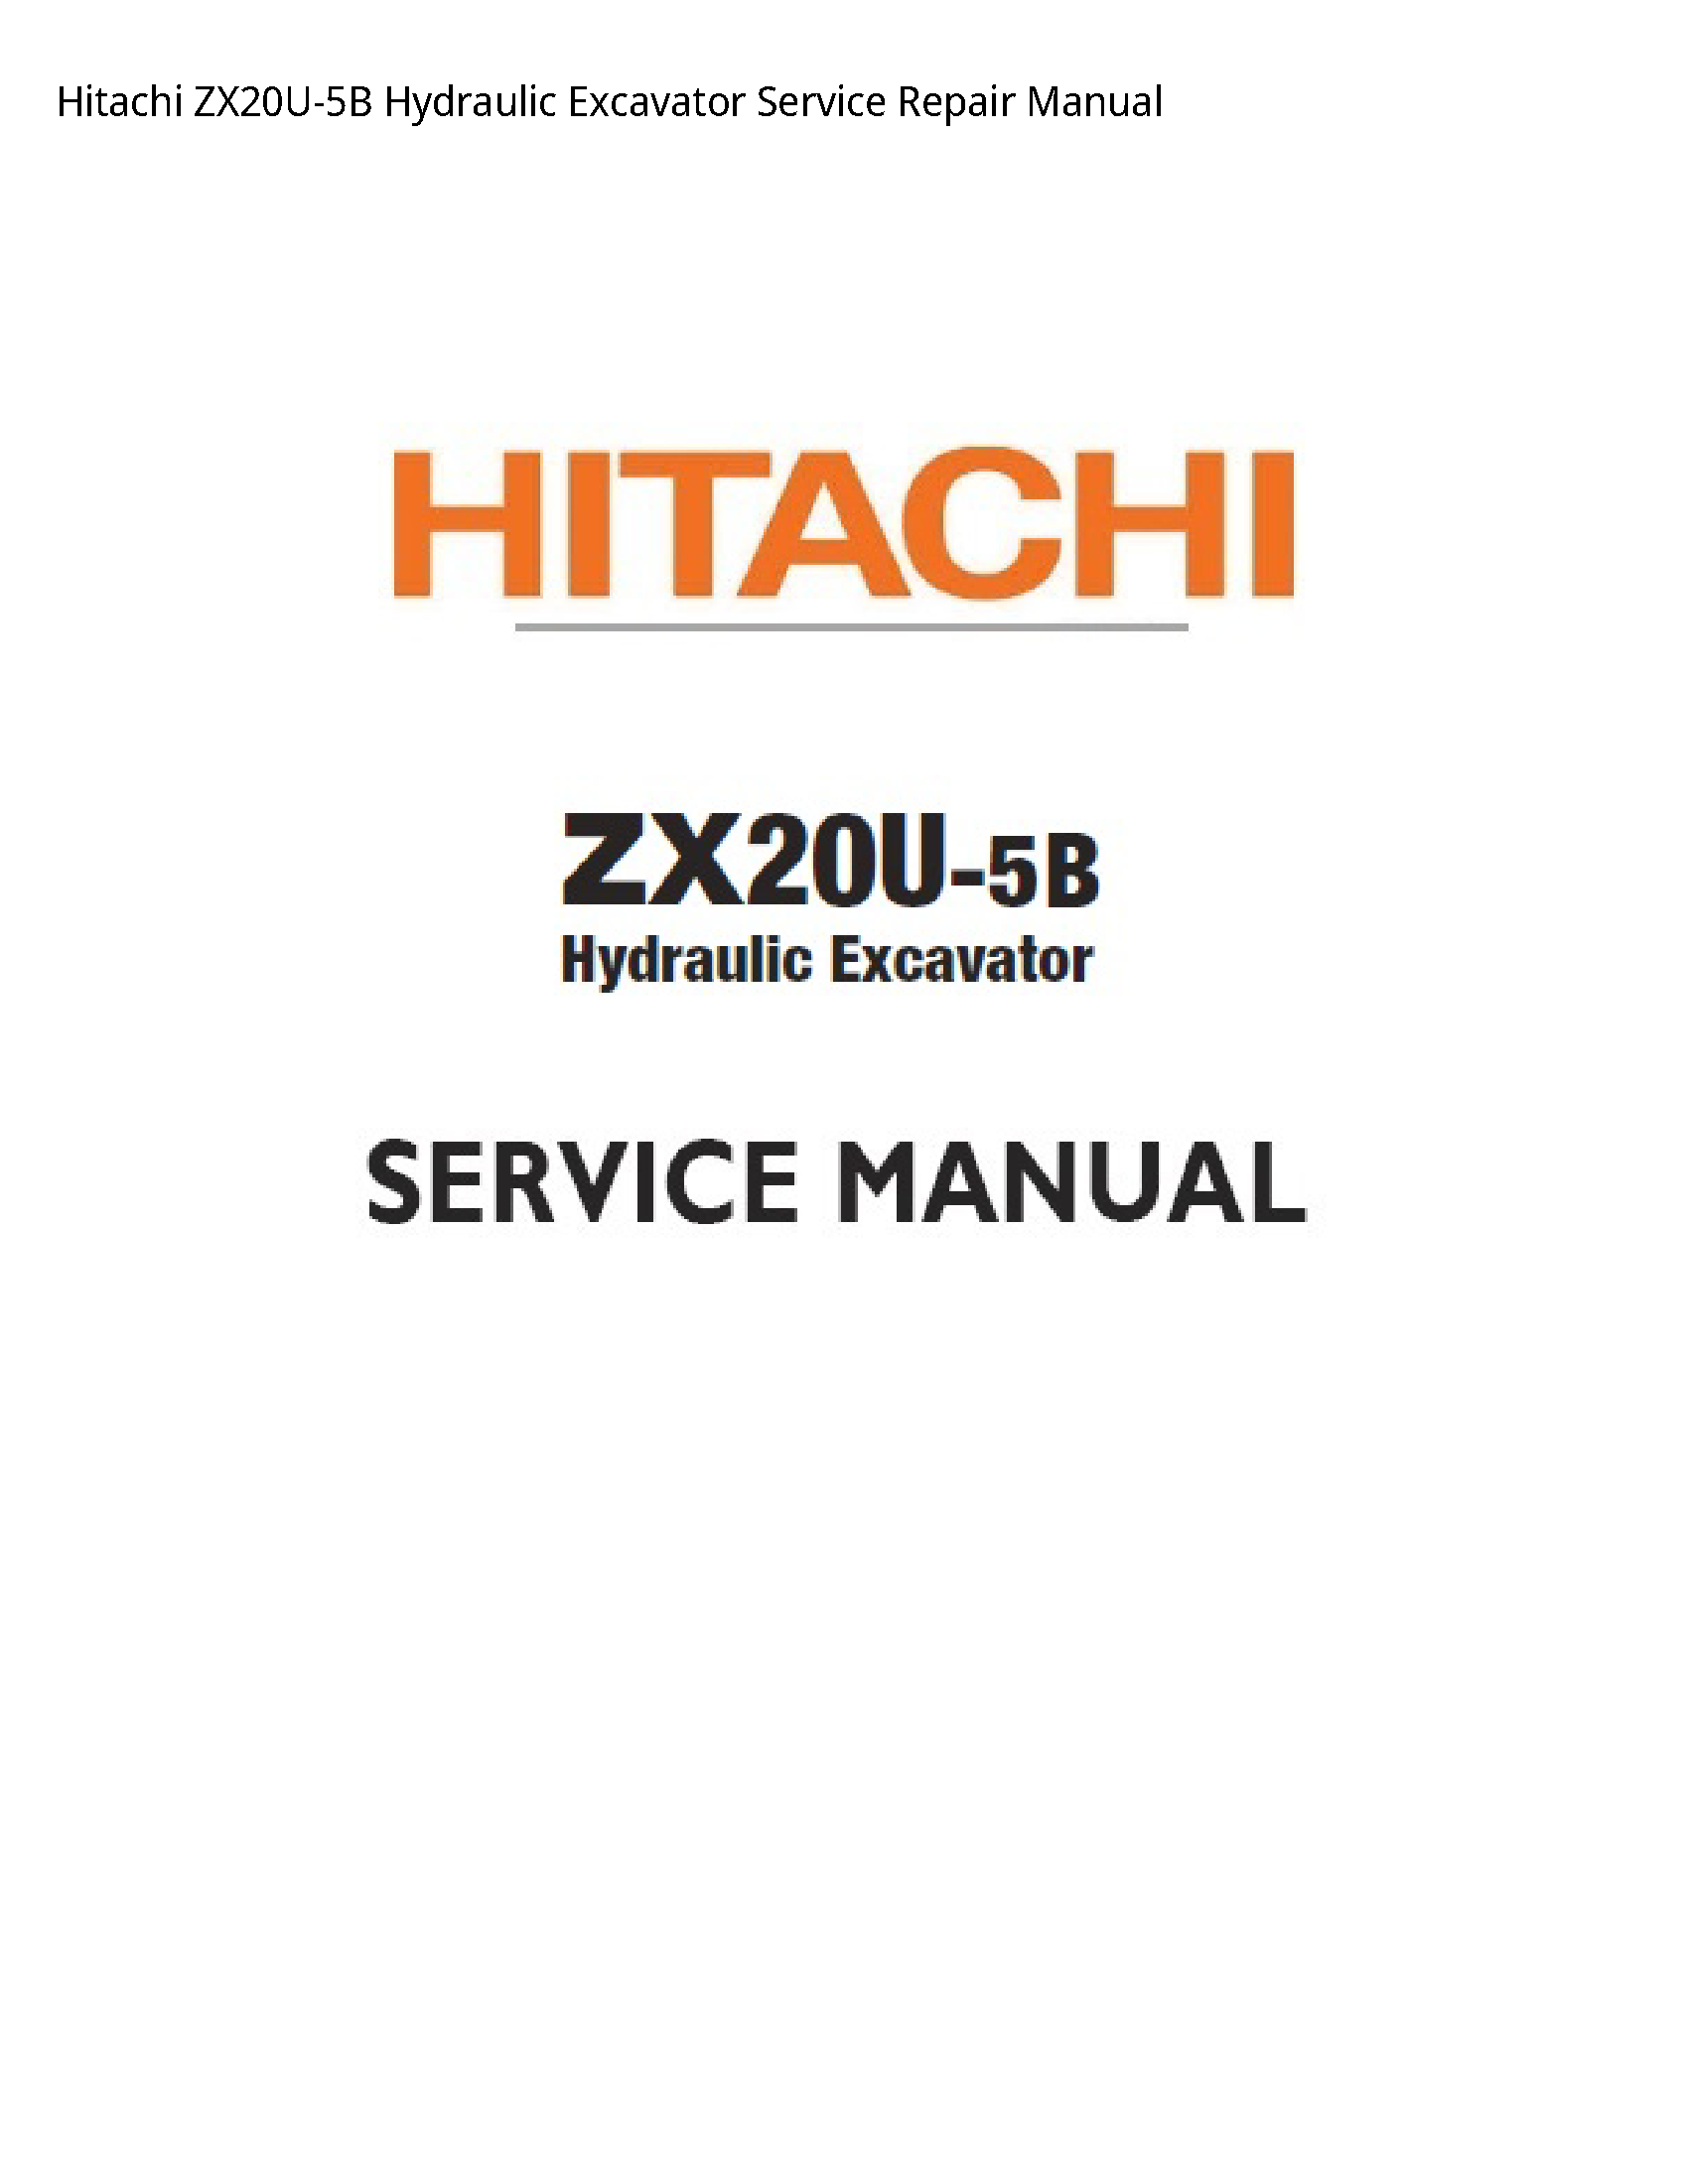 Hitachi ZX20U-5B Hydraulic Excavator manual